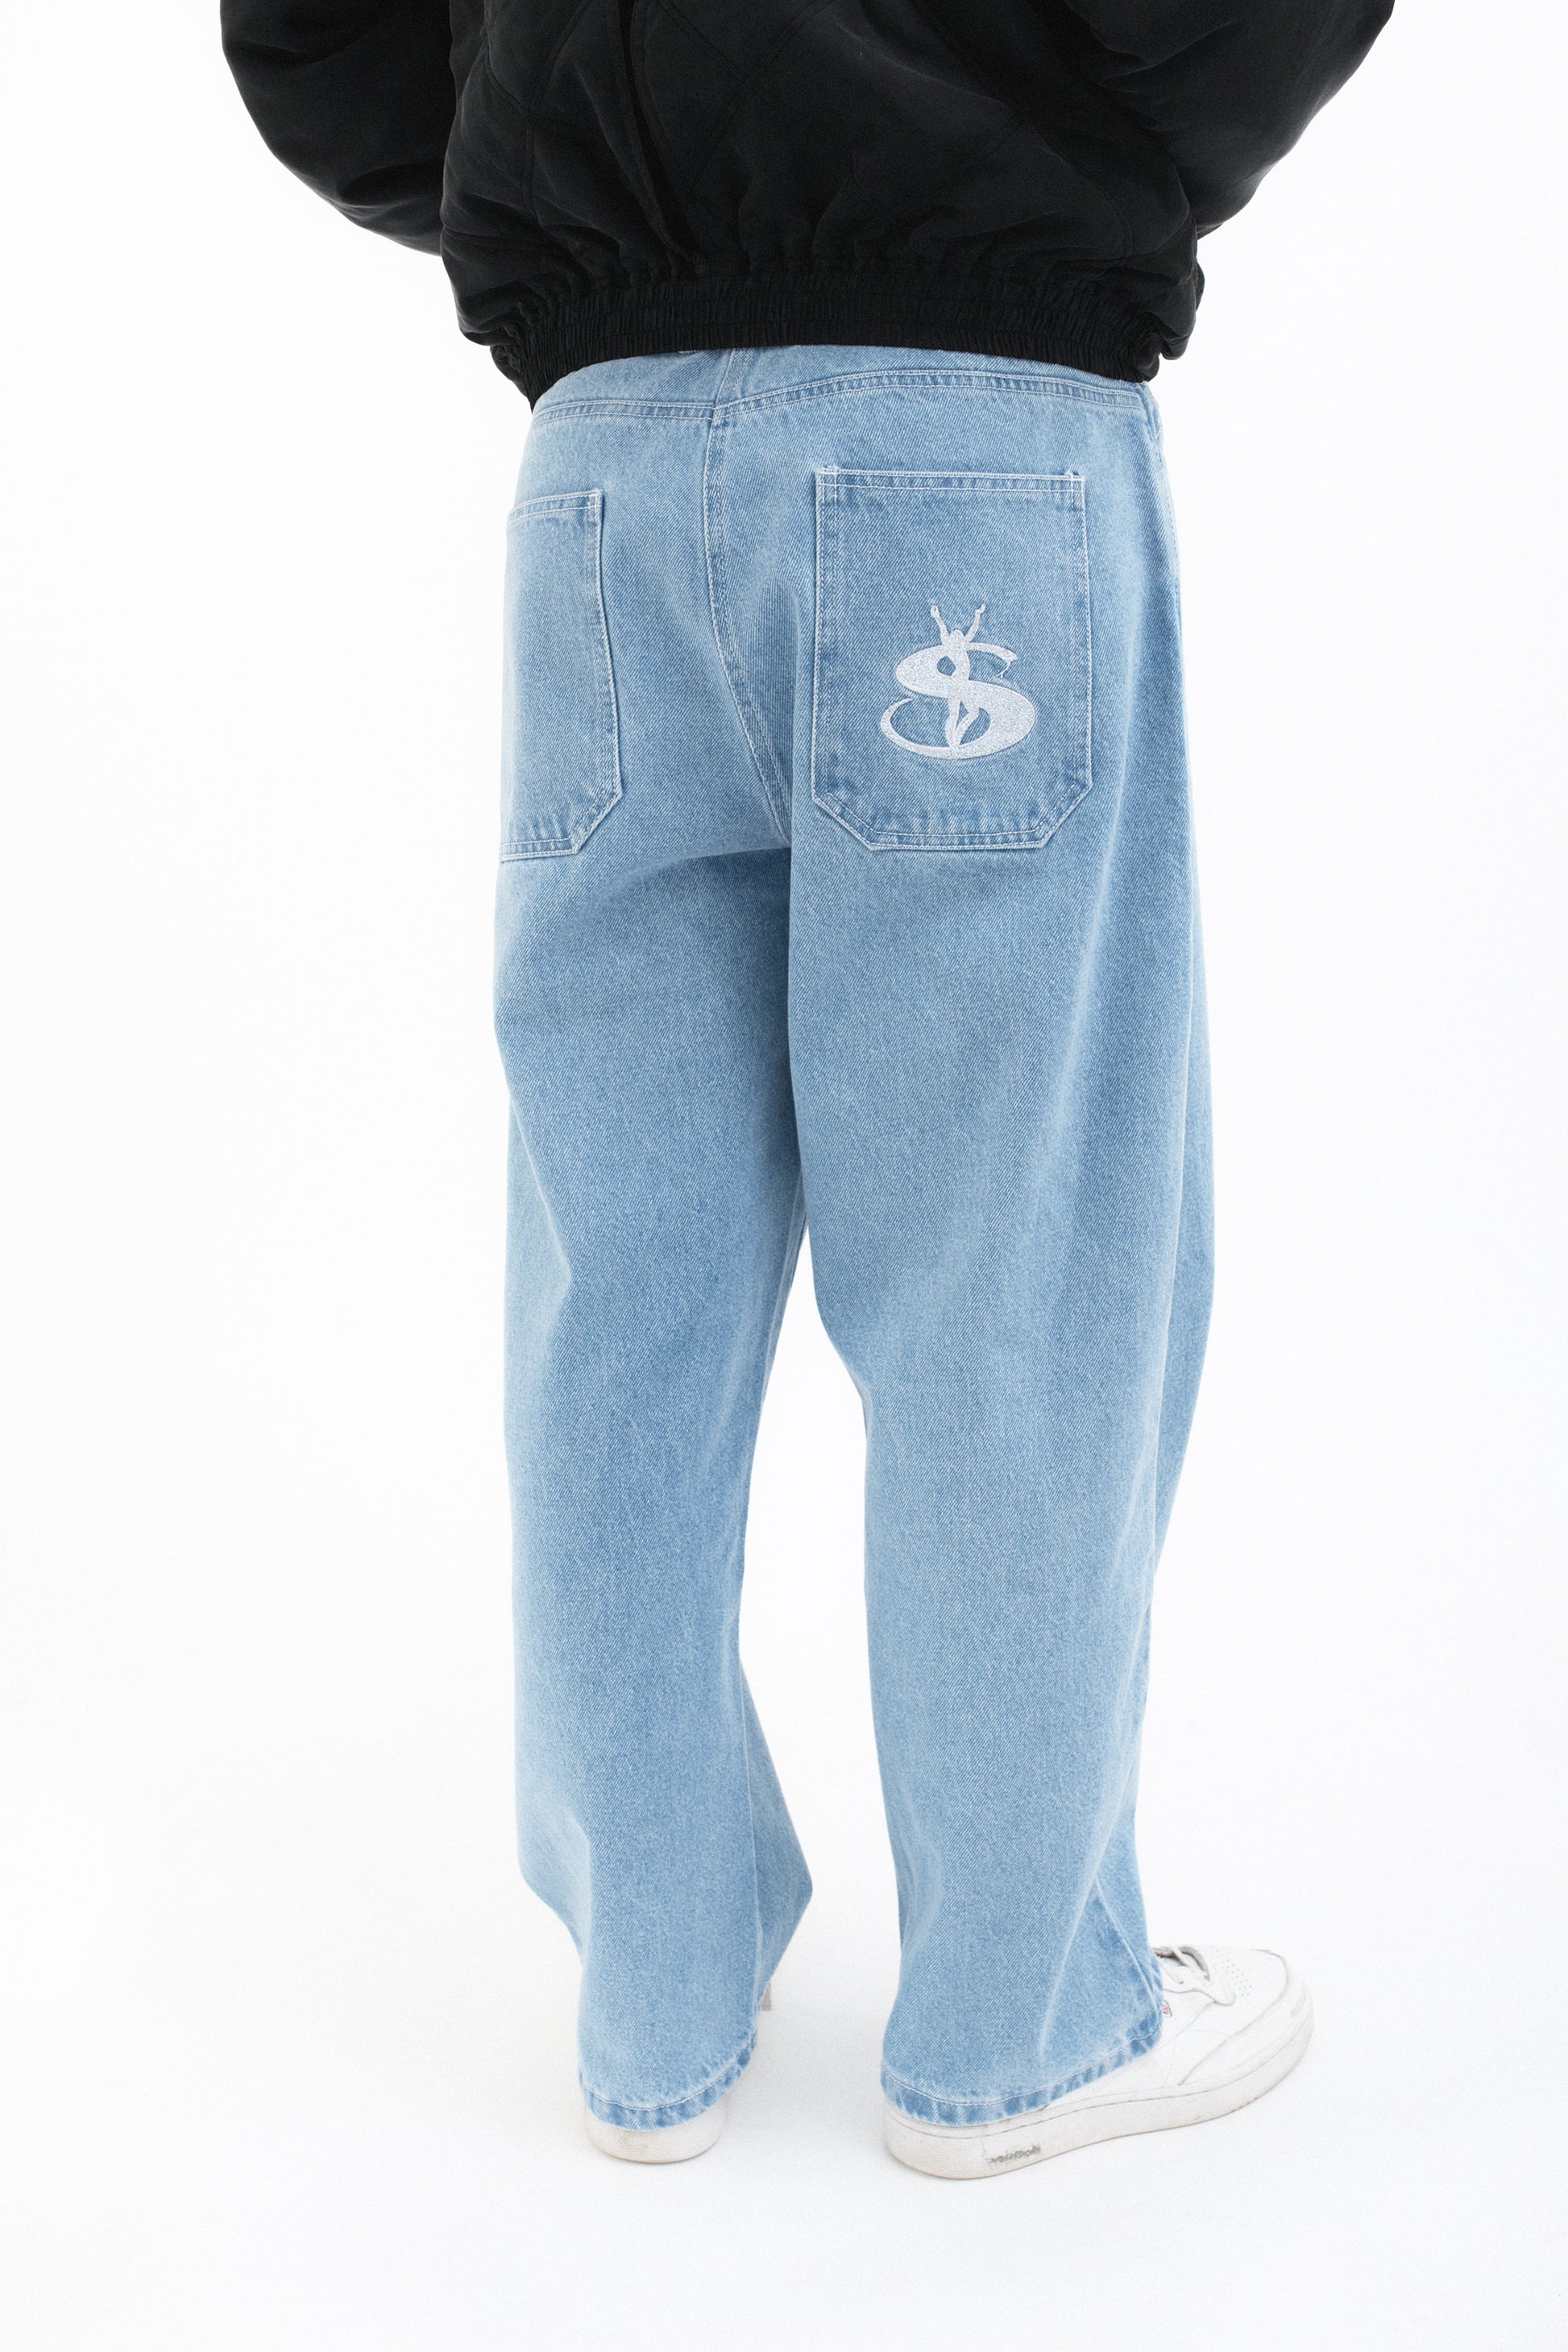 Yardsale Reflective Phantasy Jeans購入を考えてます - デニム/ジーンズ